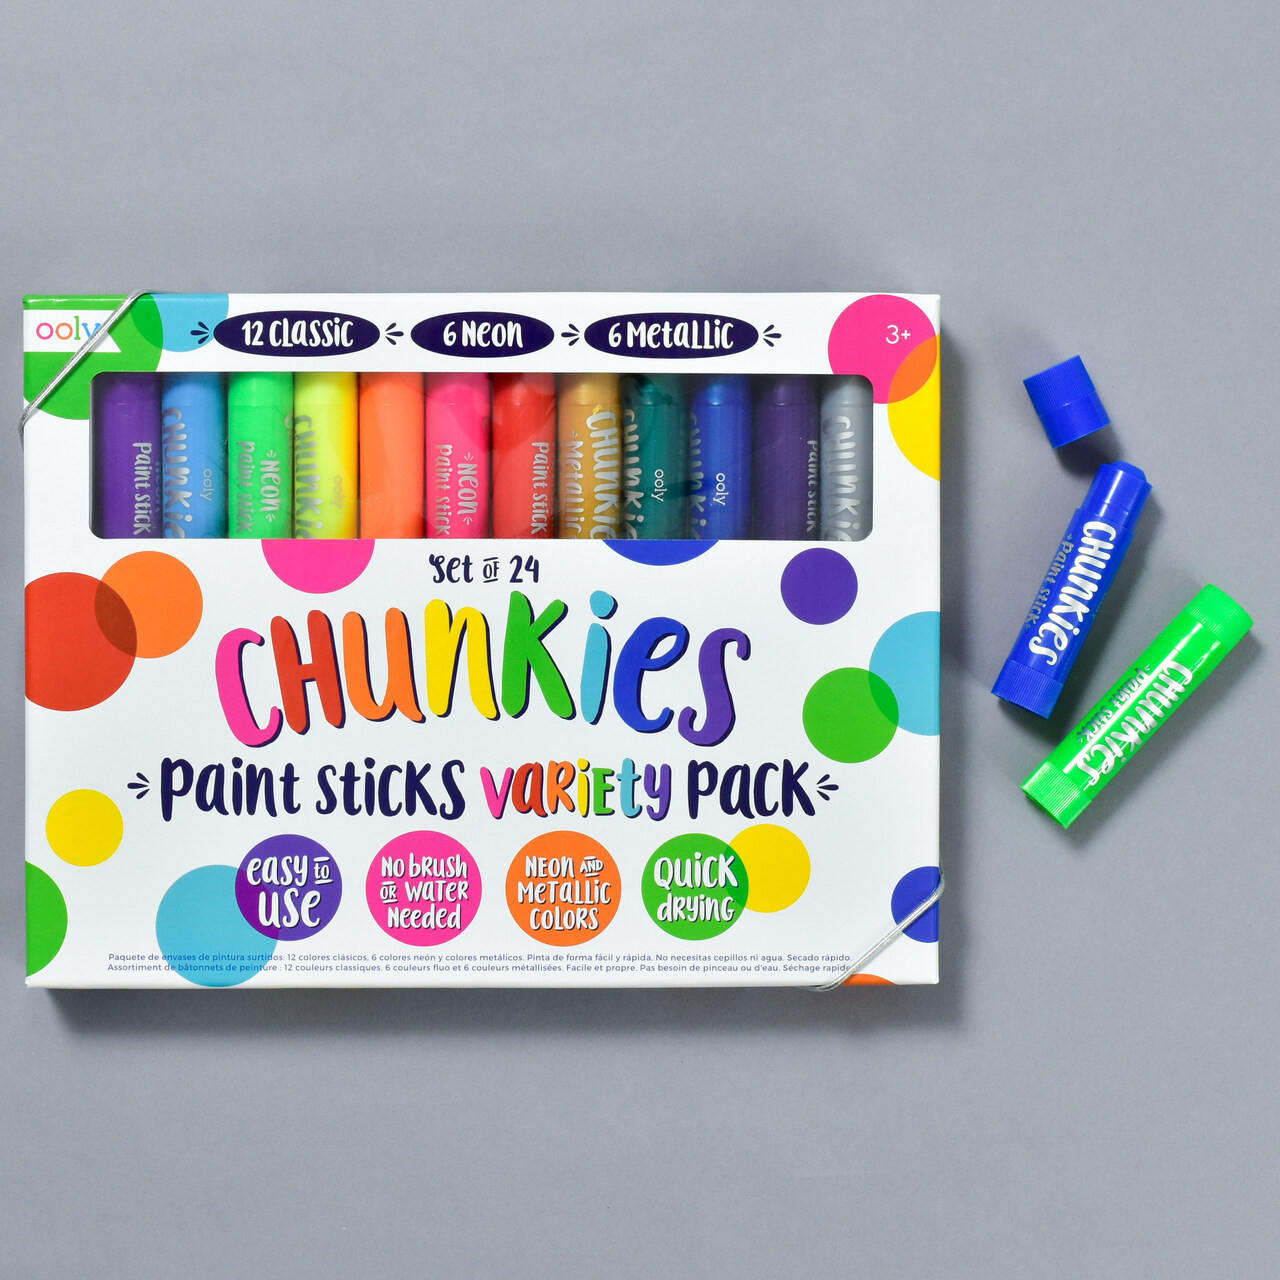 Chunkies Paint Sticks - Classic - Set of 6